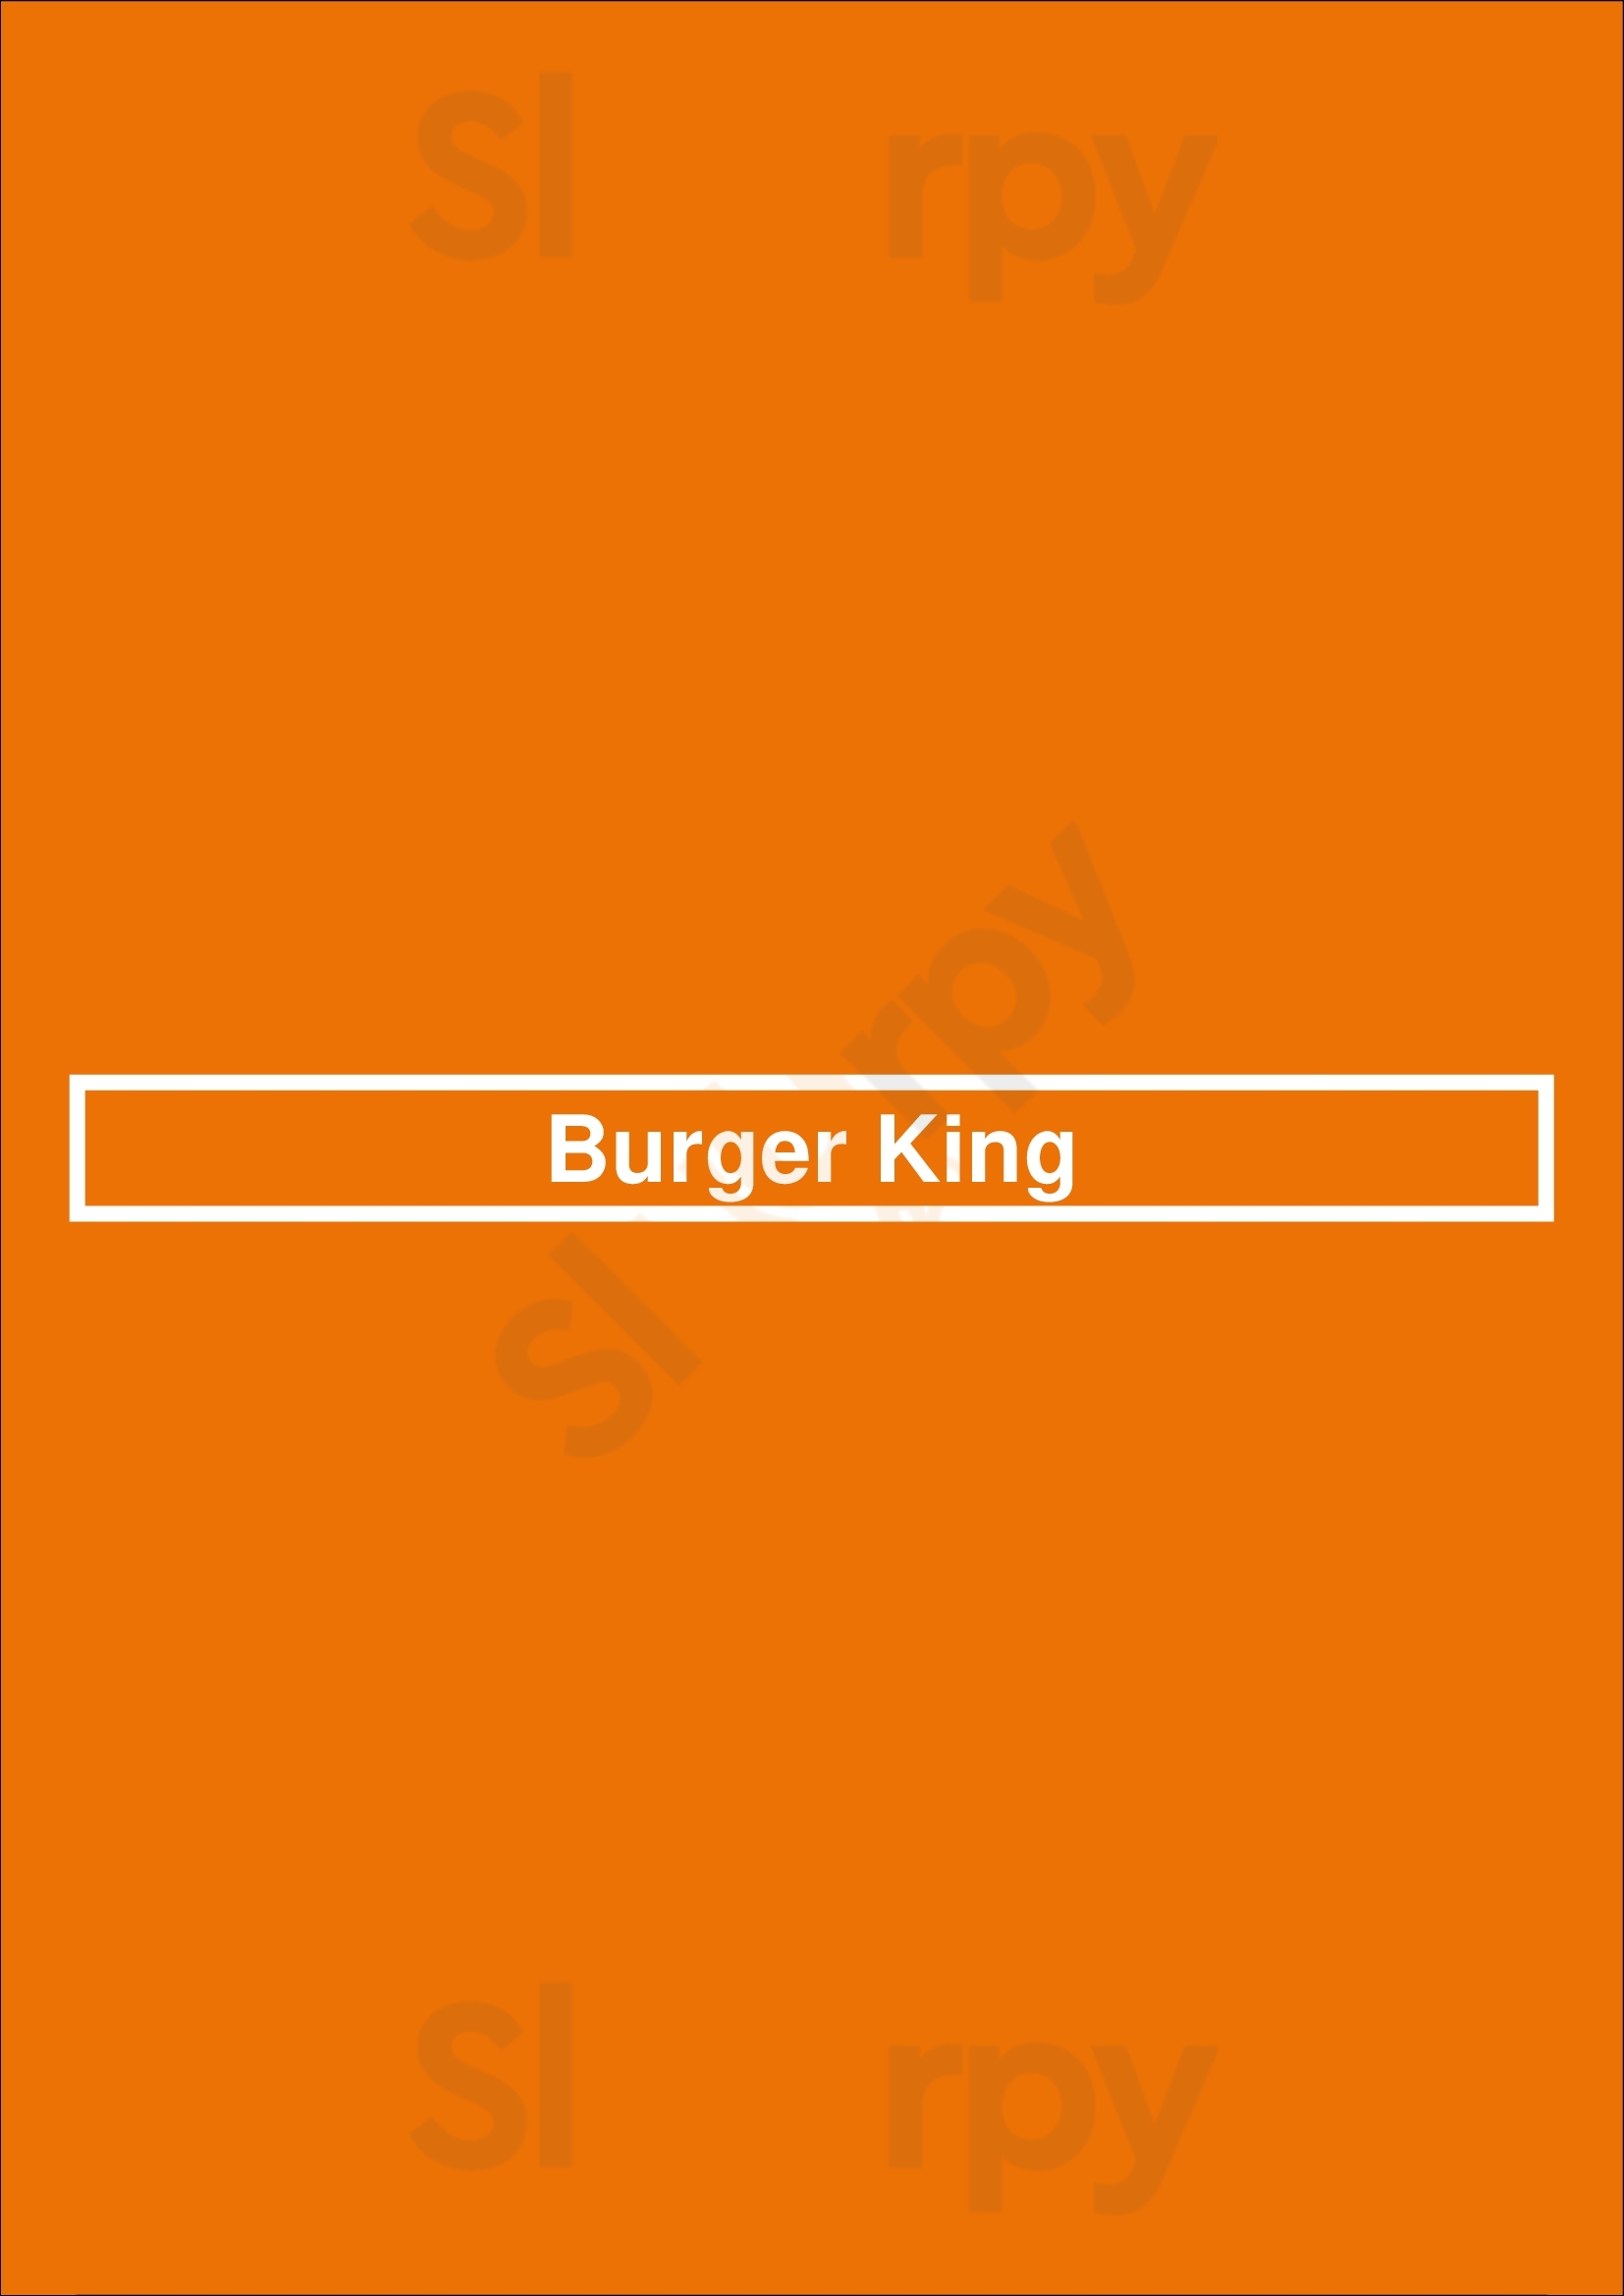 Burger King Phoenix Menu - 1